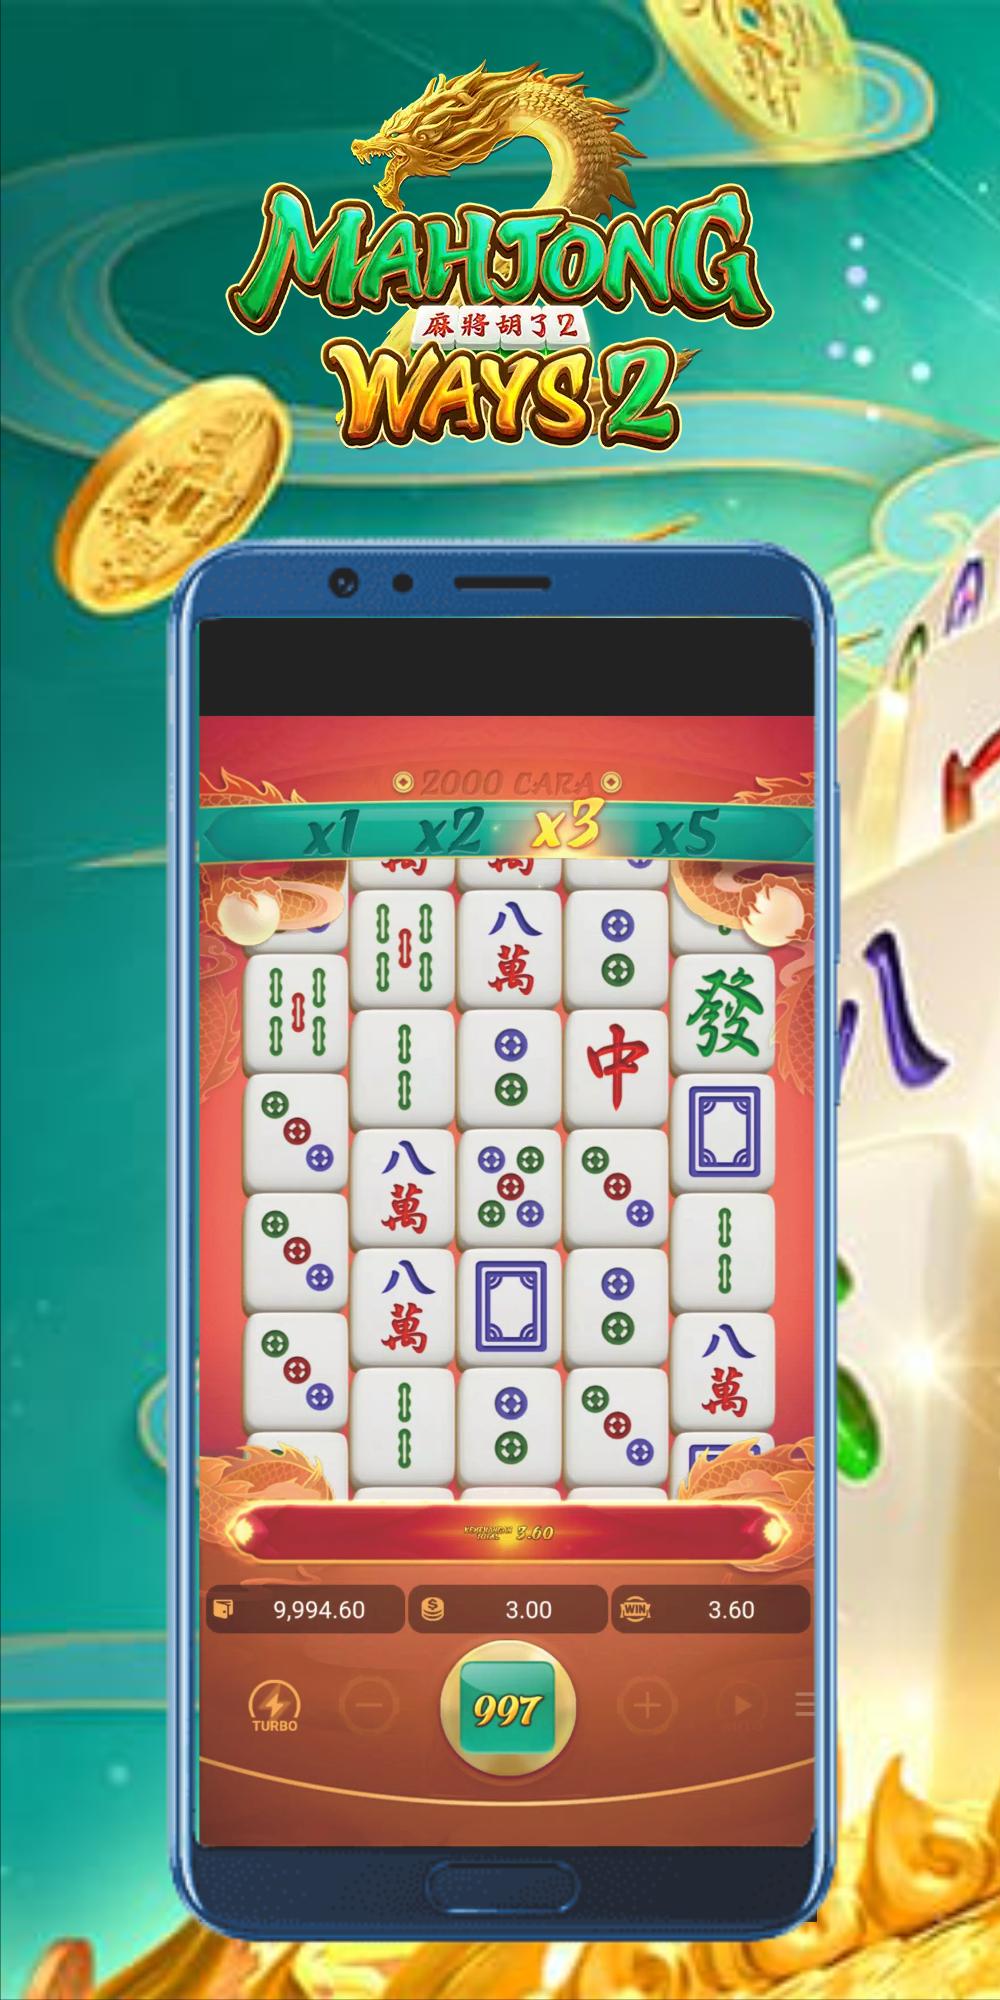 Download do APK de Slot Demo Mahjong Ways 2 para Android